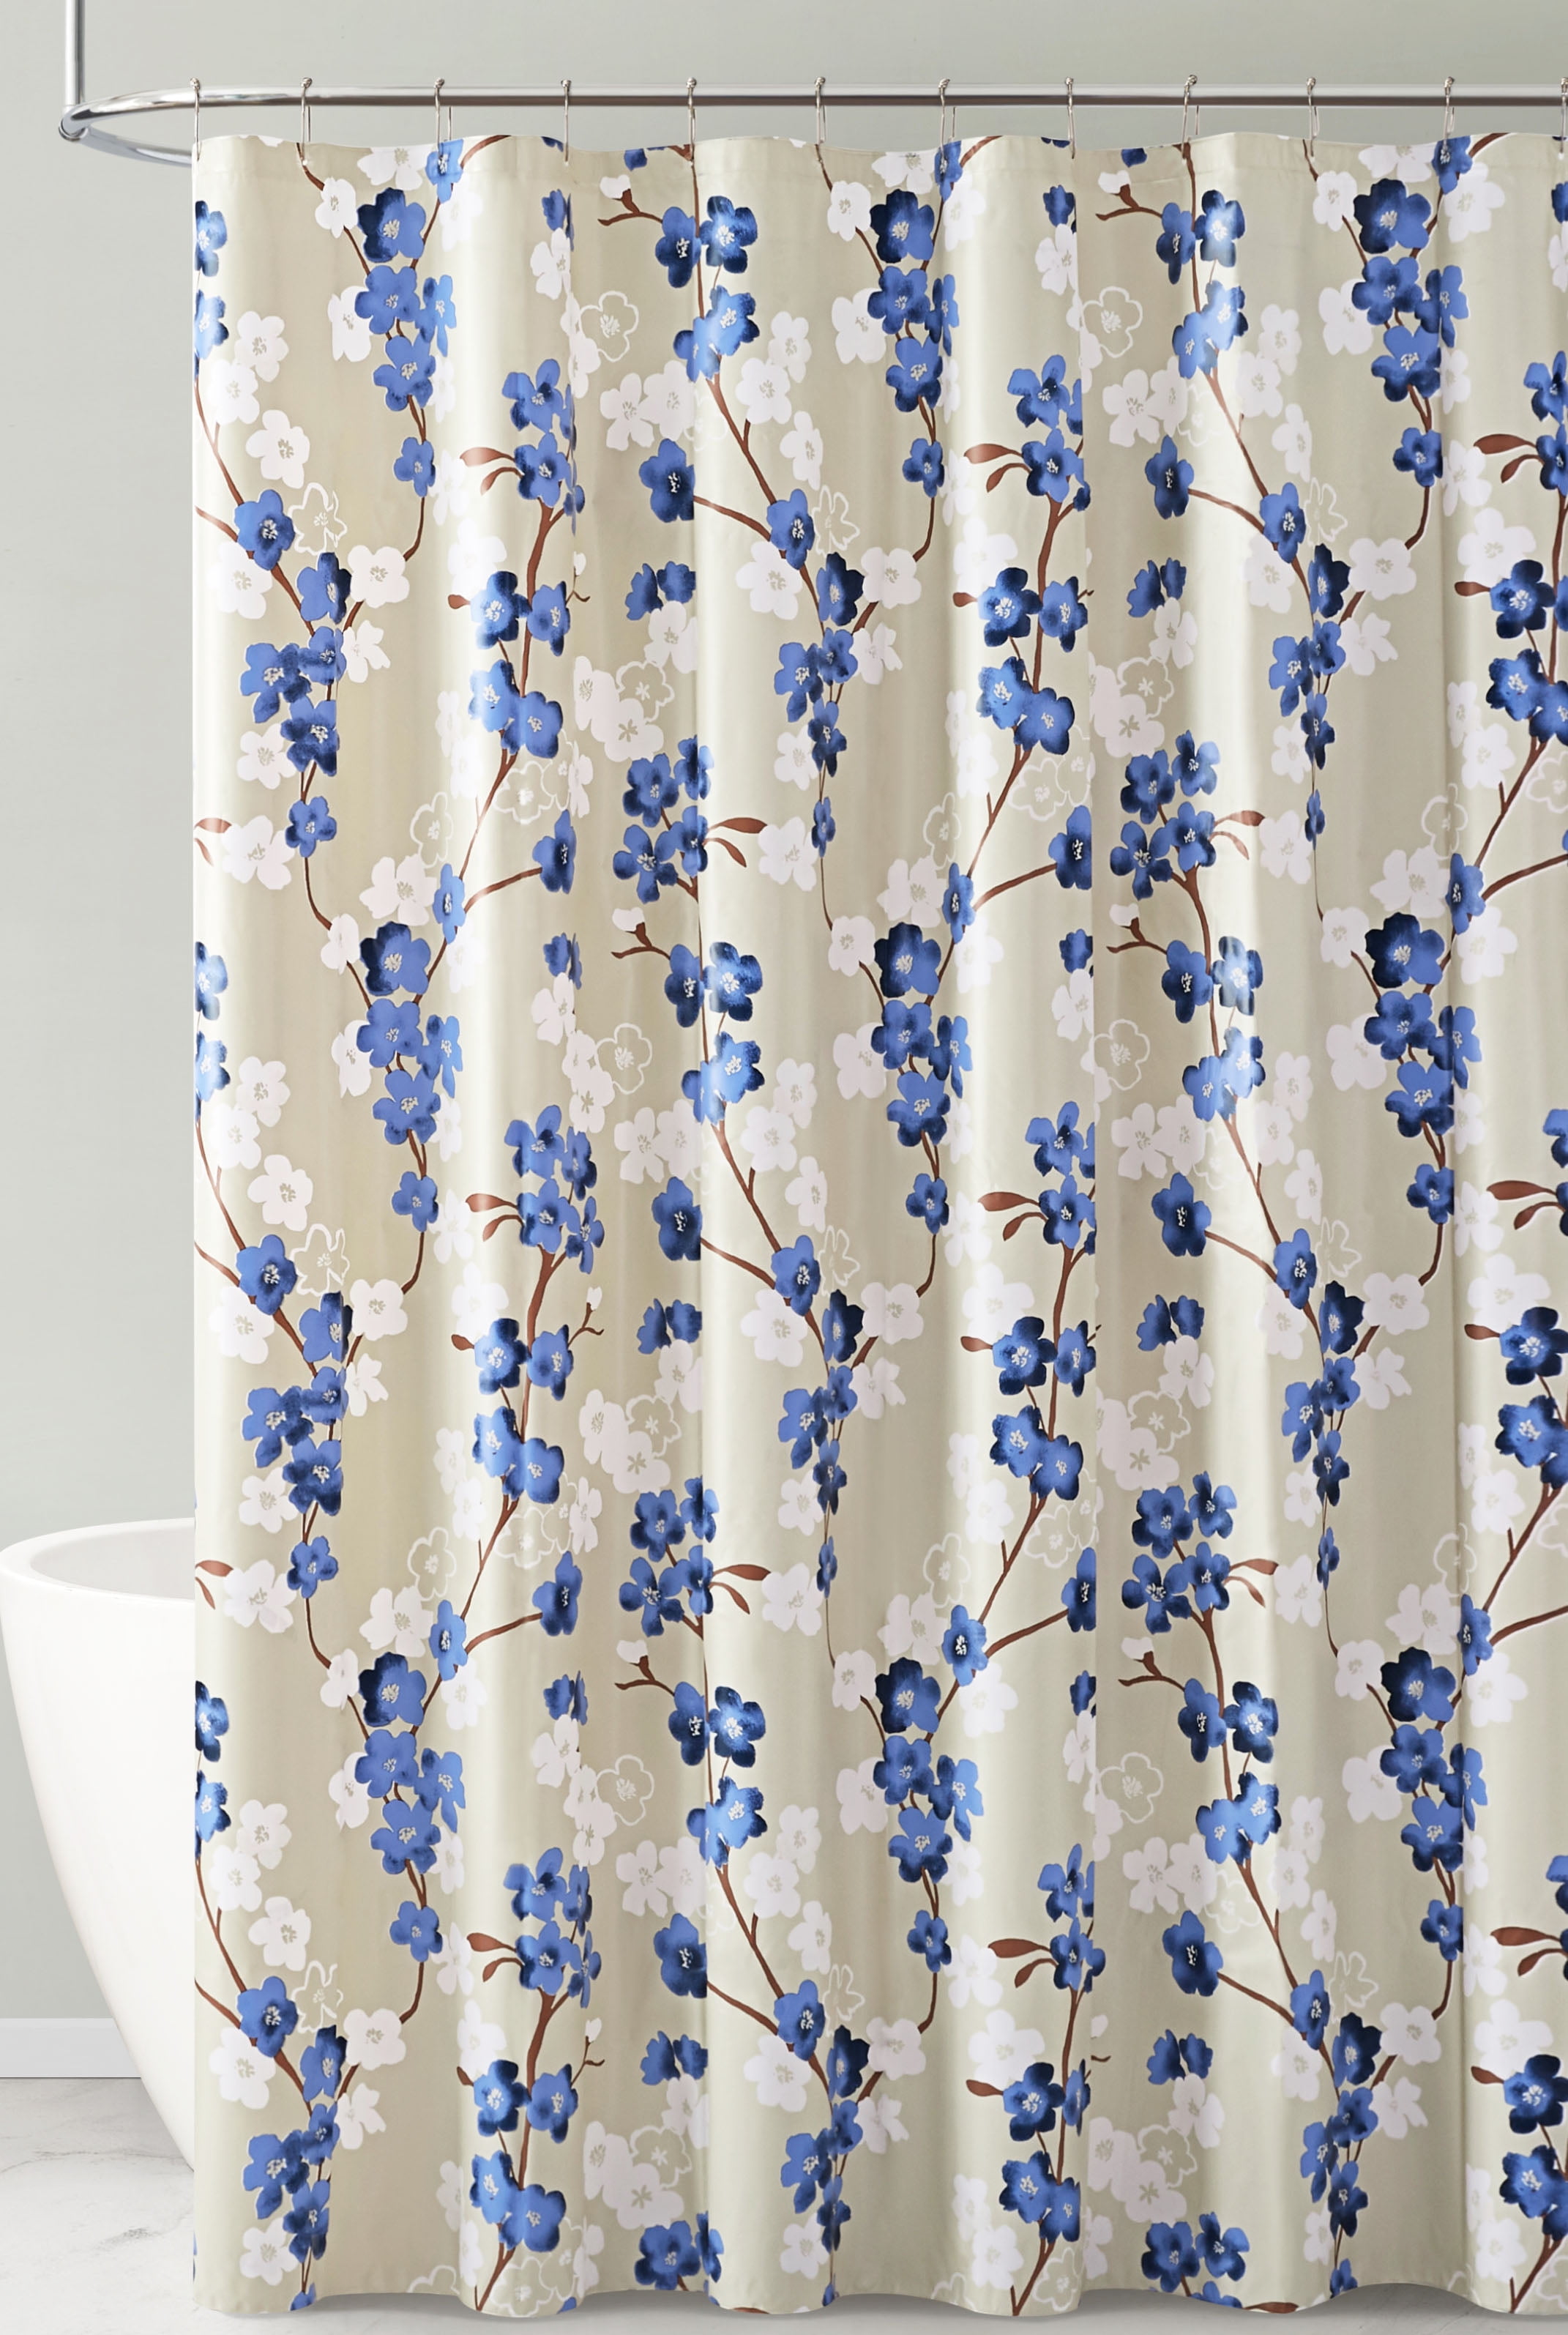 Details about   Hadley Blue Waterproof PEVA Shower Curtain 70 x 72 in Fit Standard Size Bathtub 